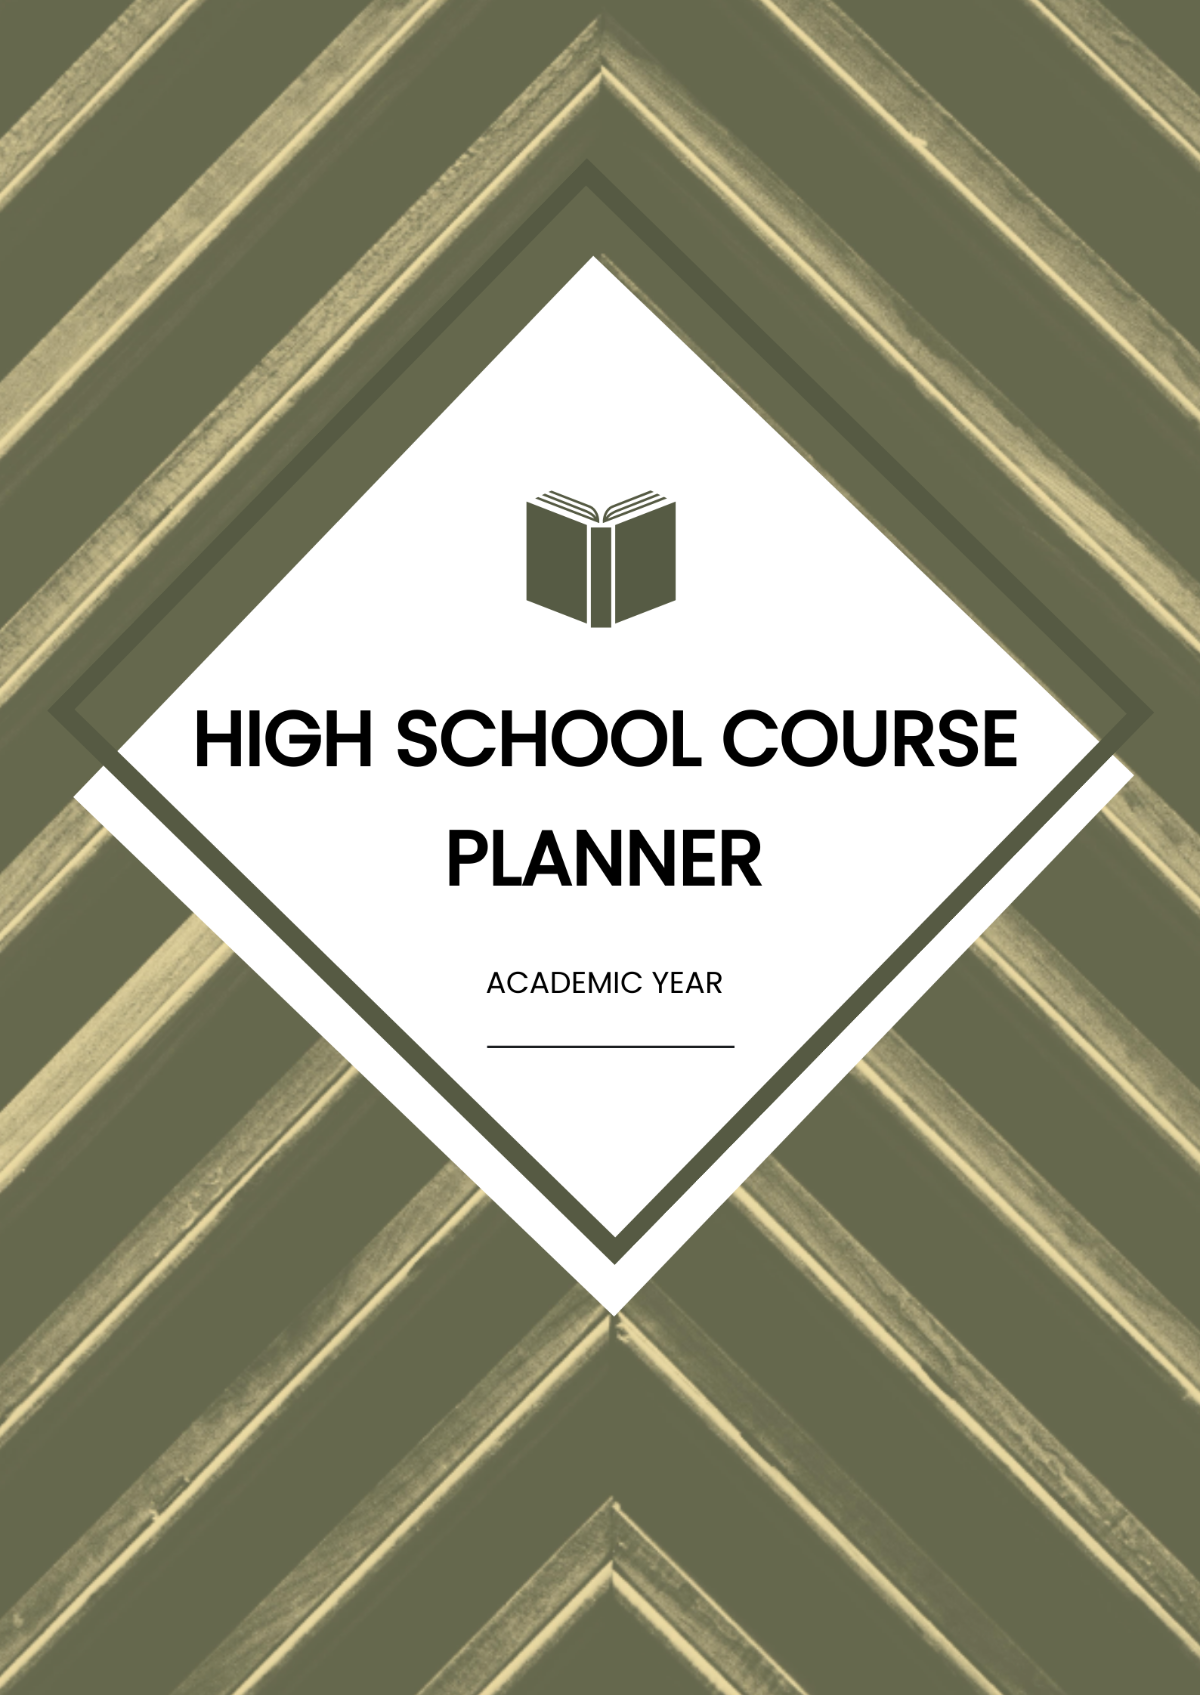 Editable High School Course Planner Template